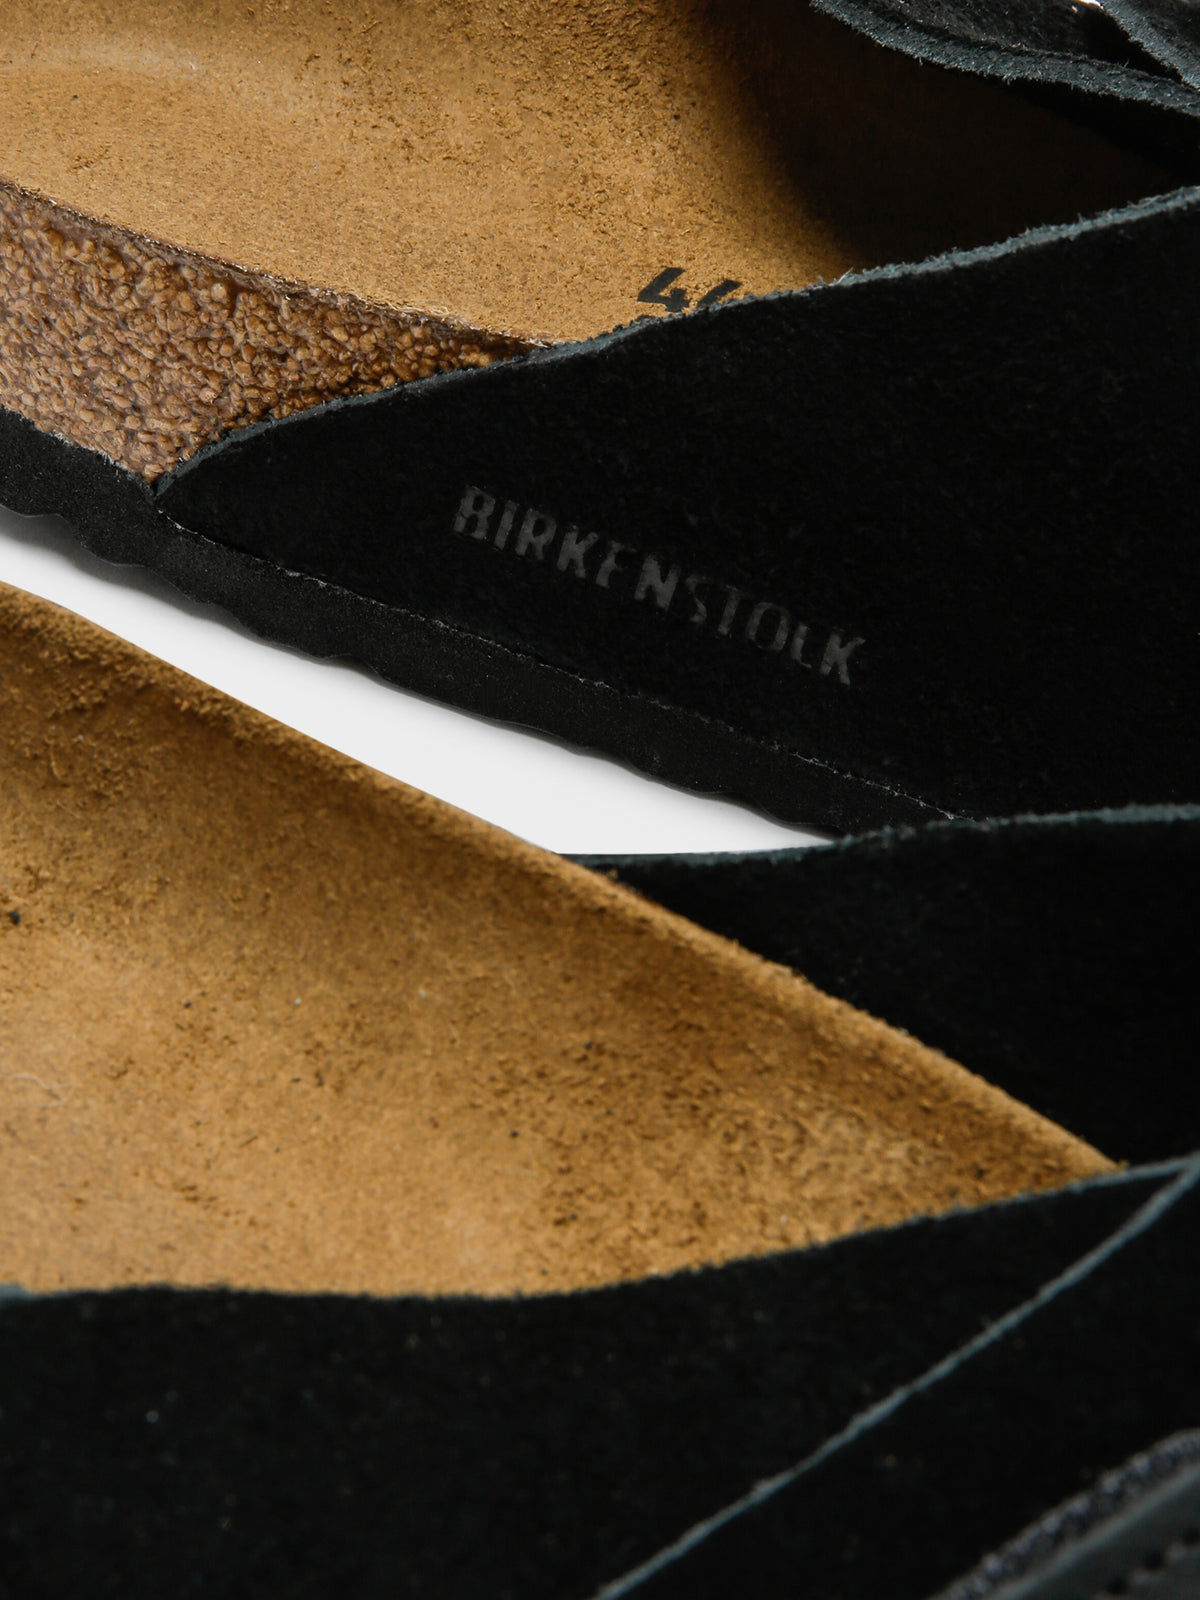 Unisex Kyoto Sandals in Black Suede